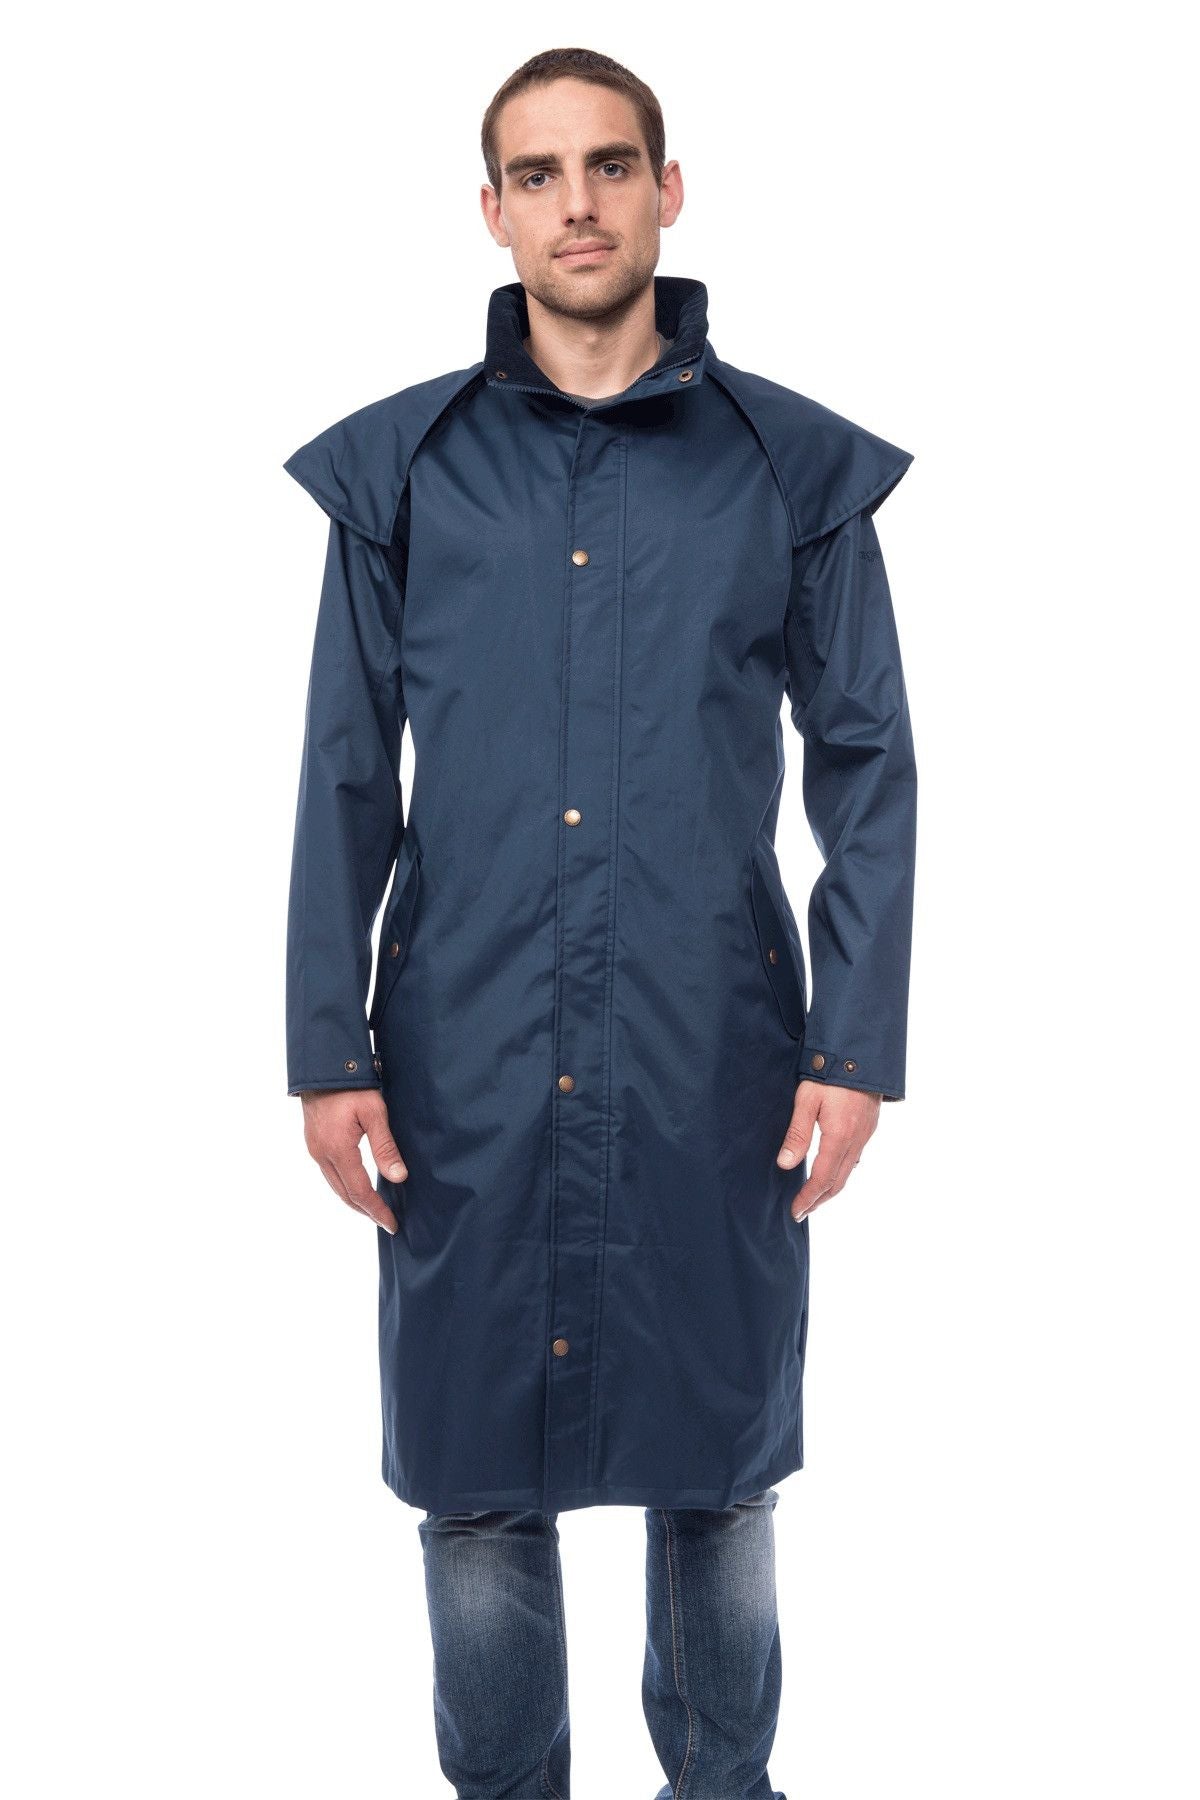 Stockman Mens New Waterproof Full Length Overcoat | Target Dry